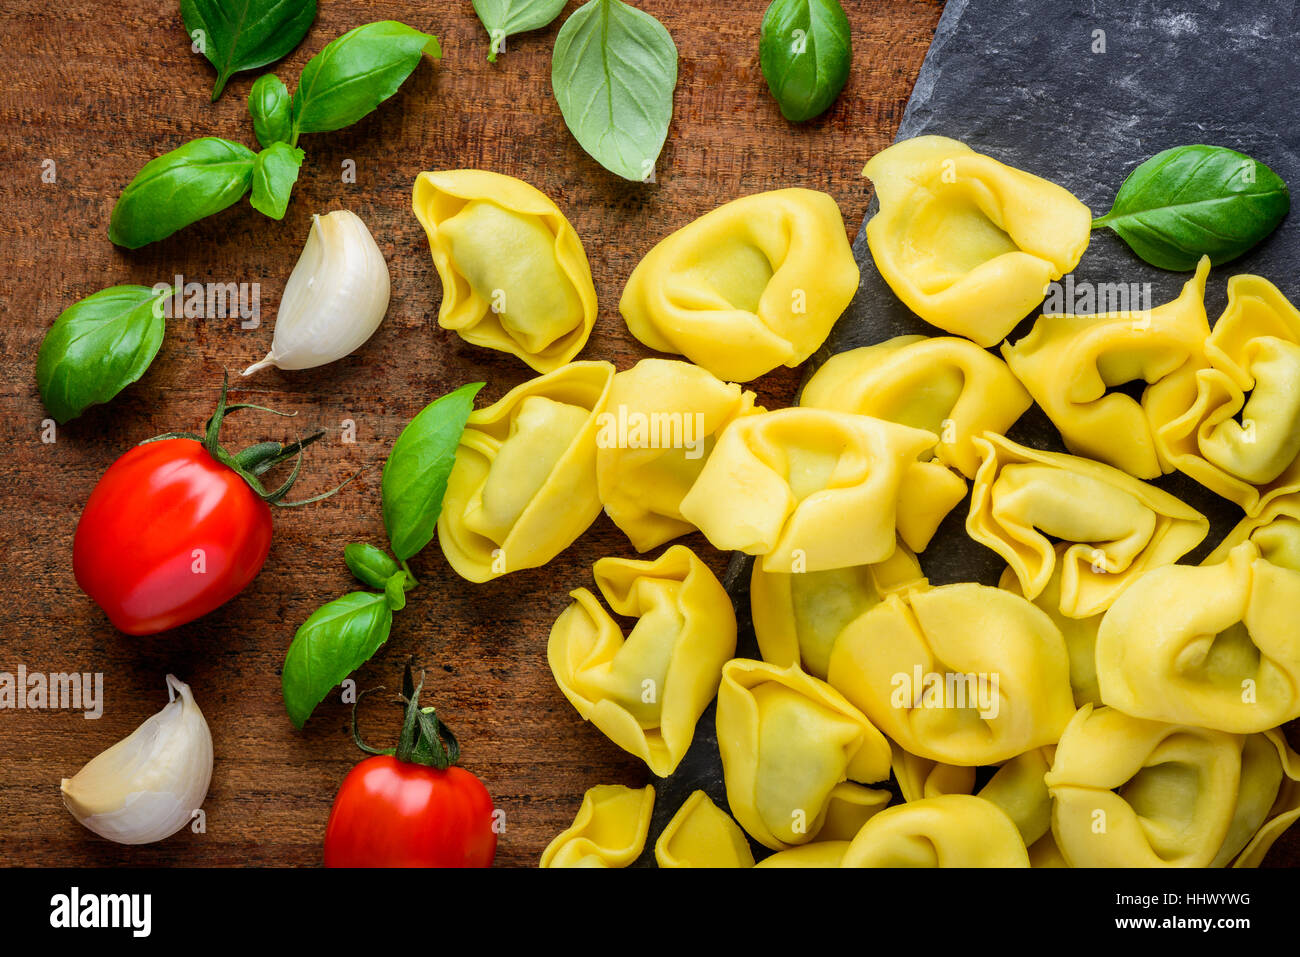 Yellow Tortellini Pasta with Green Basil Leaves, garlic cooking ingredients Stock Photo